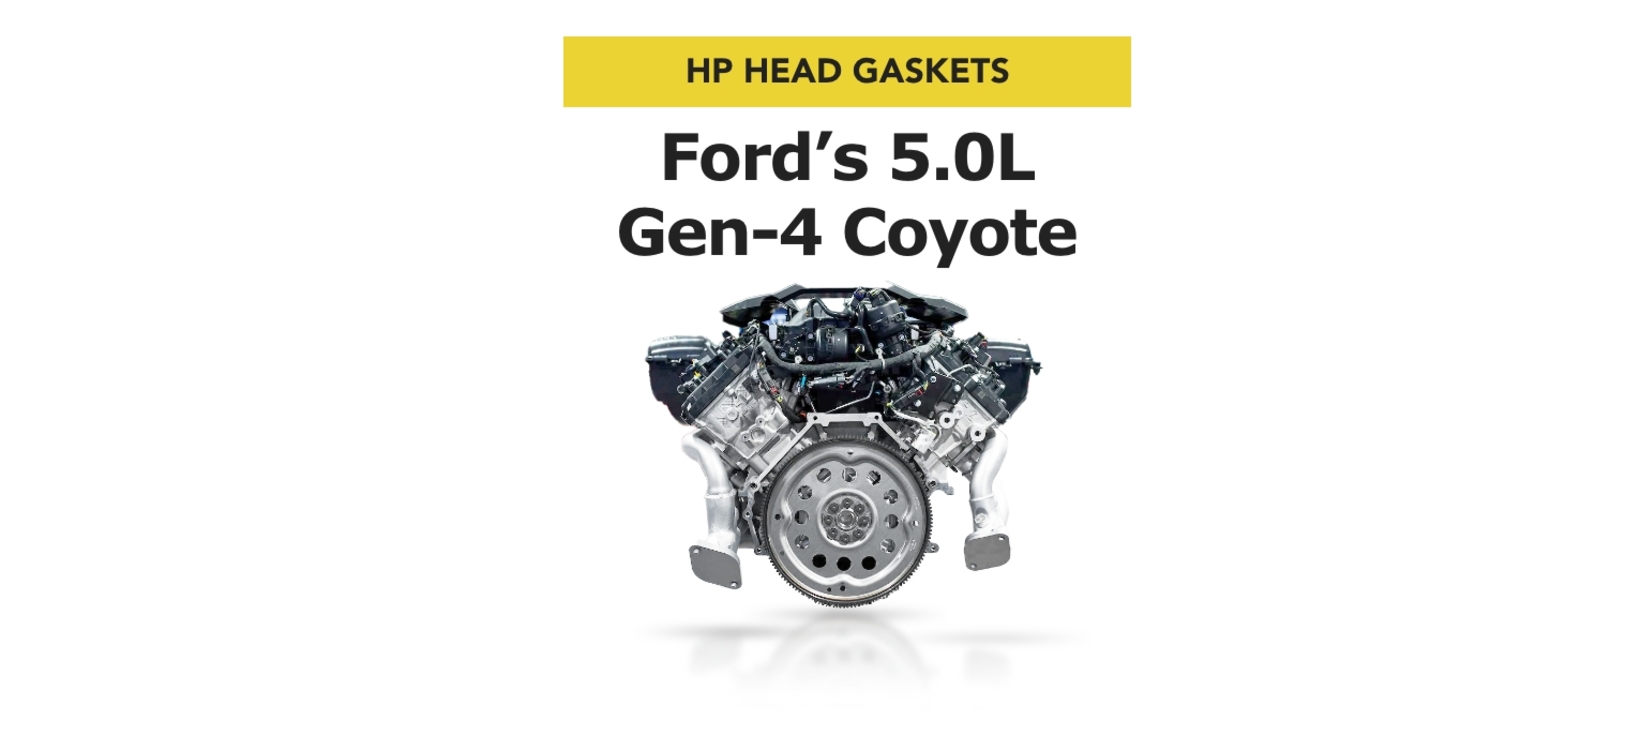 Ford’s 5.0L Gen-4 Coyote Head Gasket